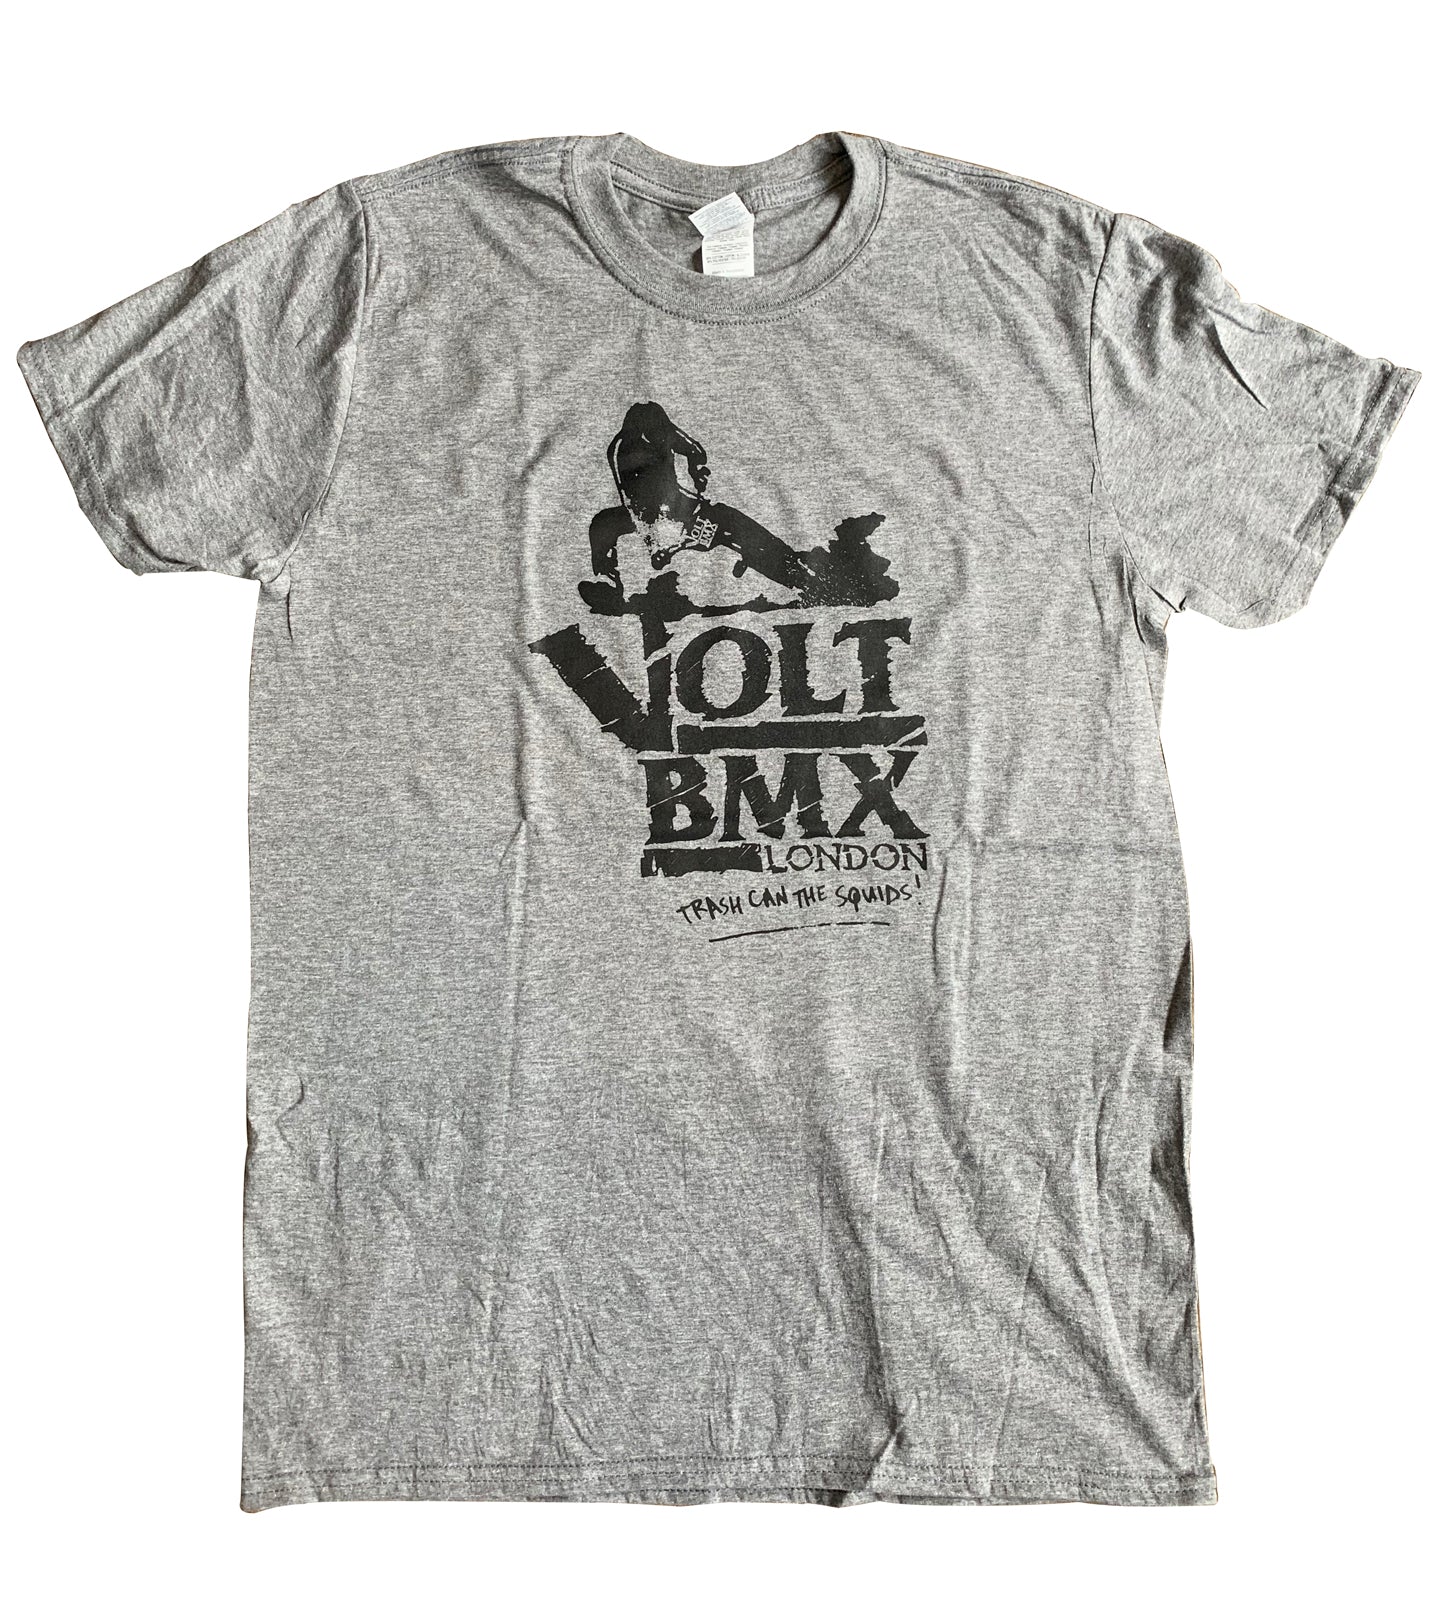 Volt BMX trash can the squids t shirt